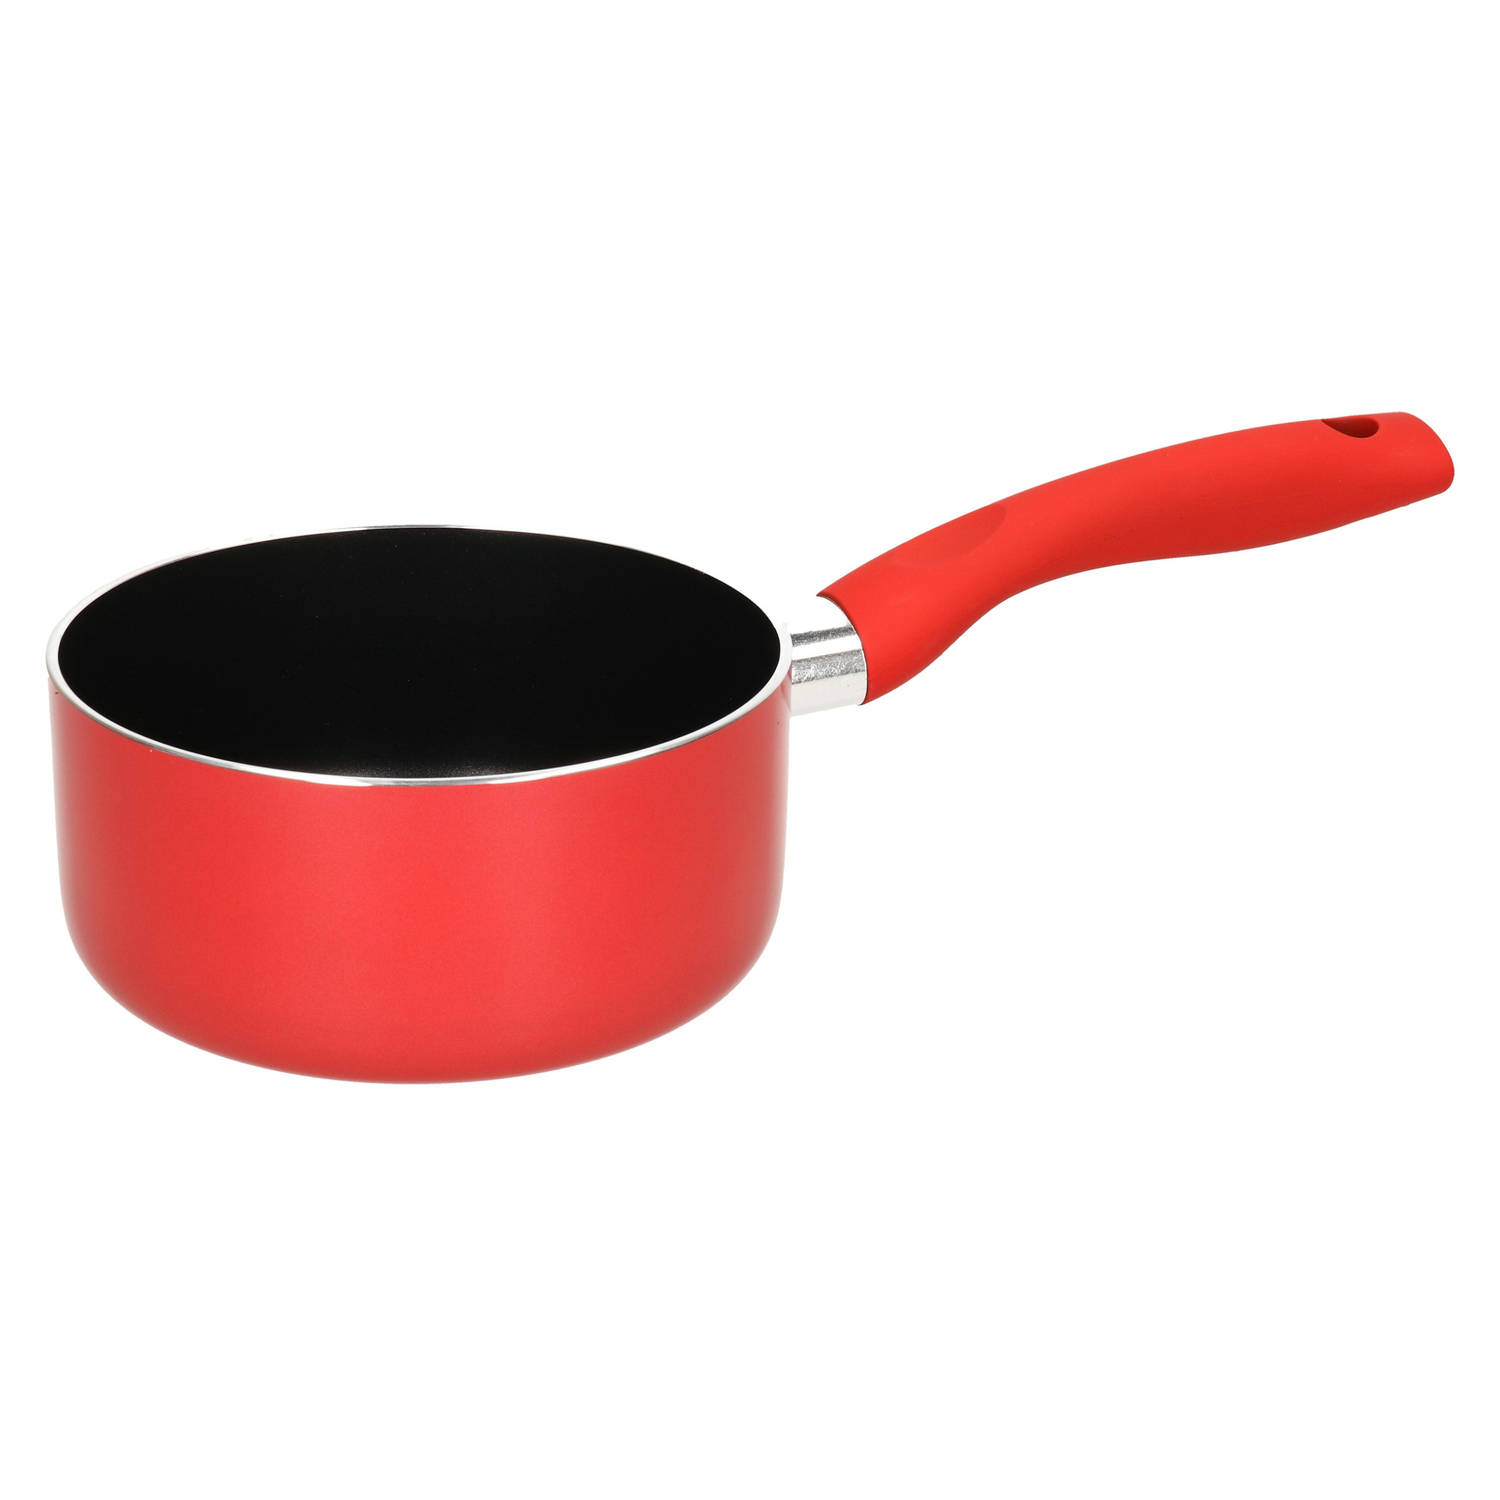 5Five - Steelpan/sauspan - Inductie - aluminium - rood/zwart - D16 cm